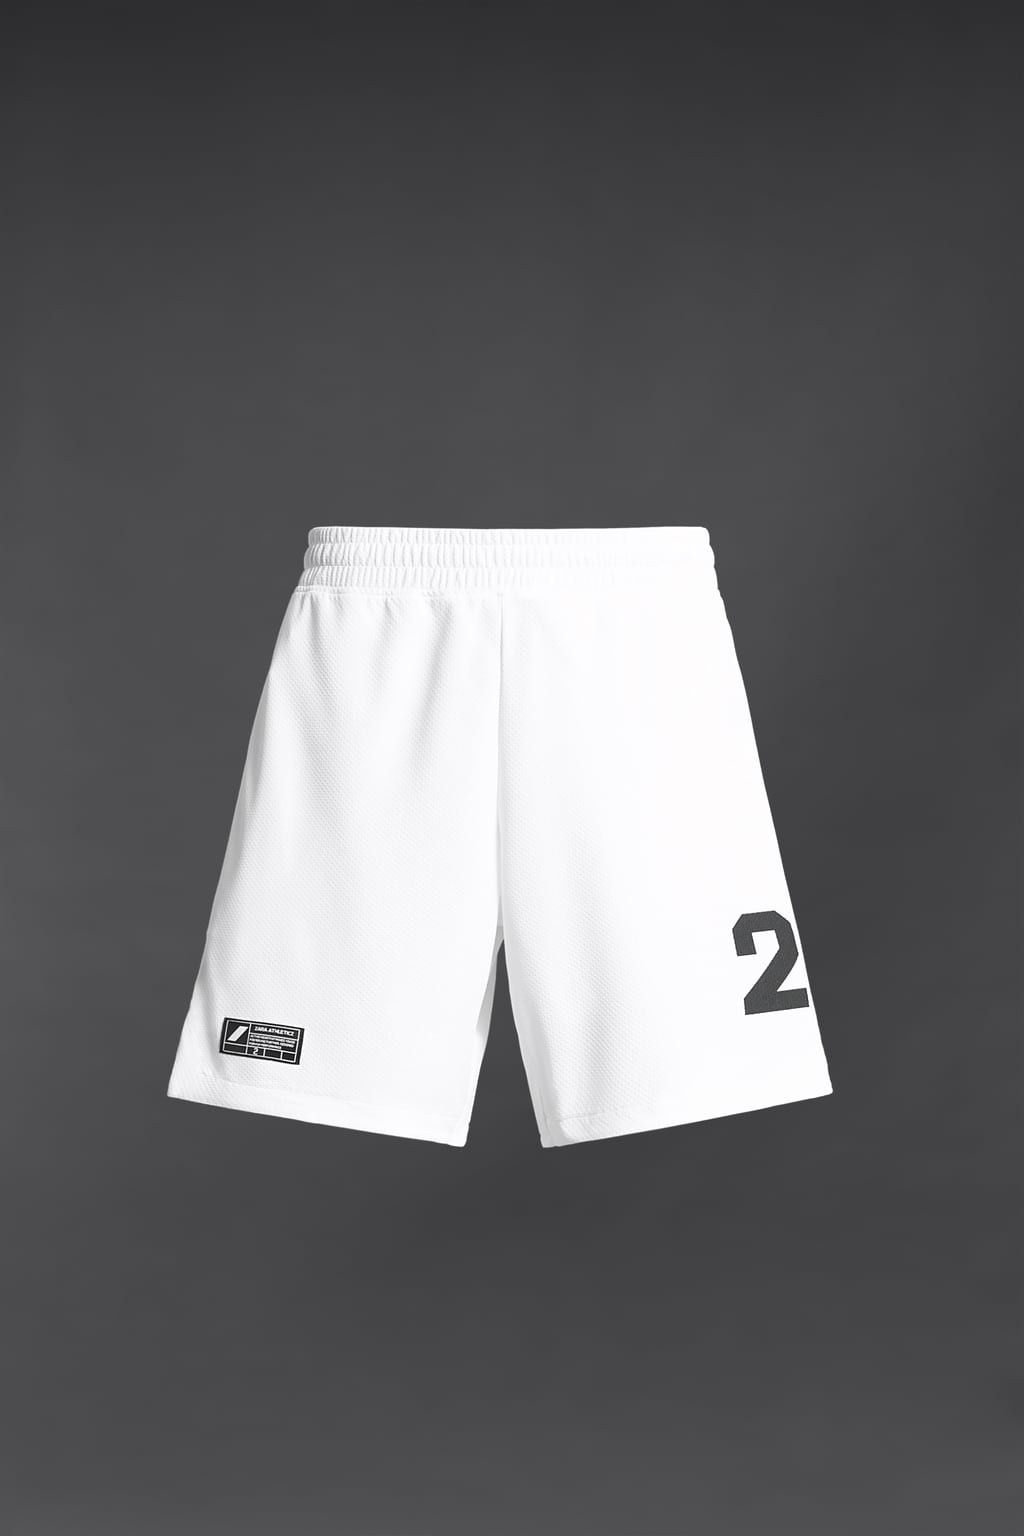 Баскетбольные шорты ZARA, белый шорты zara размер 34 белый